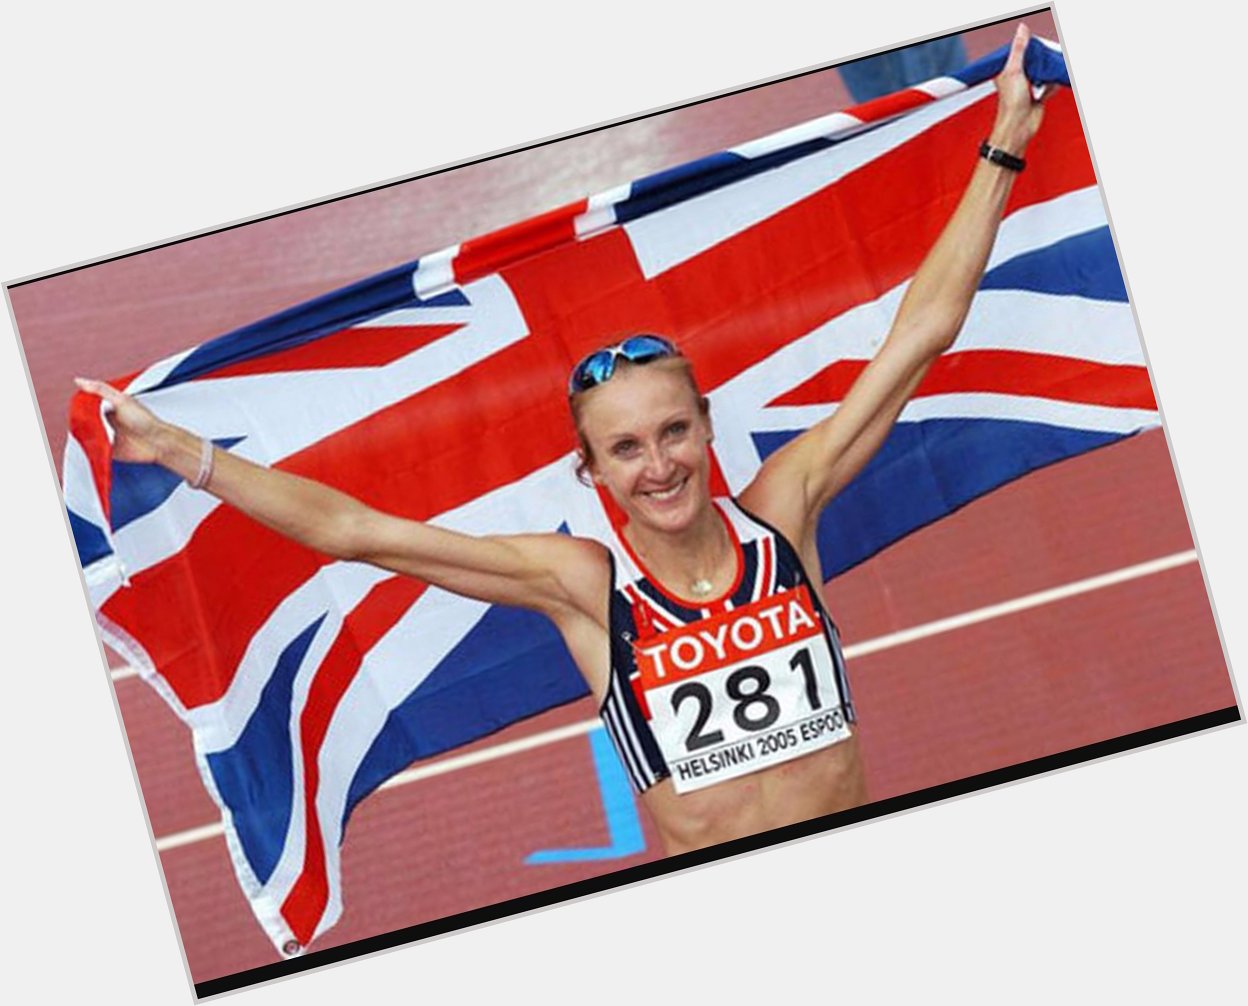 17 dicembre 1973 nasce Paula Radcliffe, atleta britannica Happy Birthday  